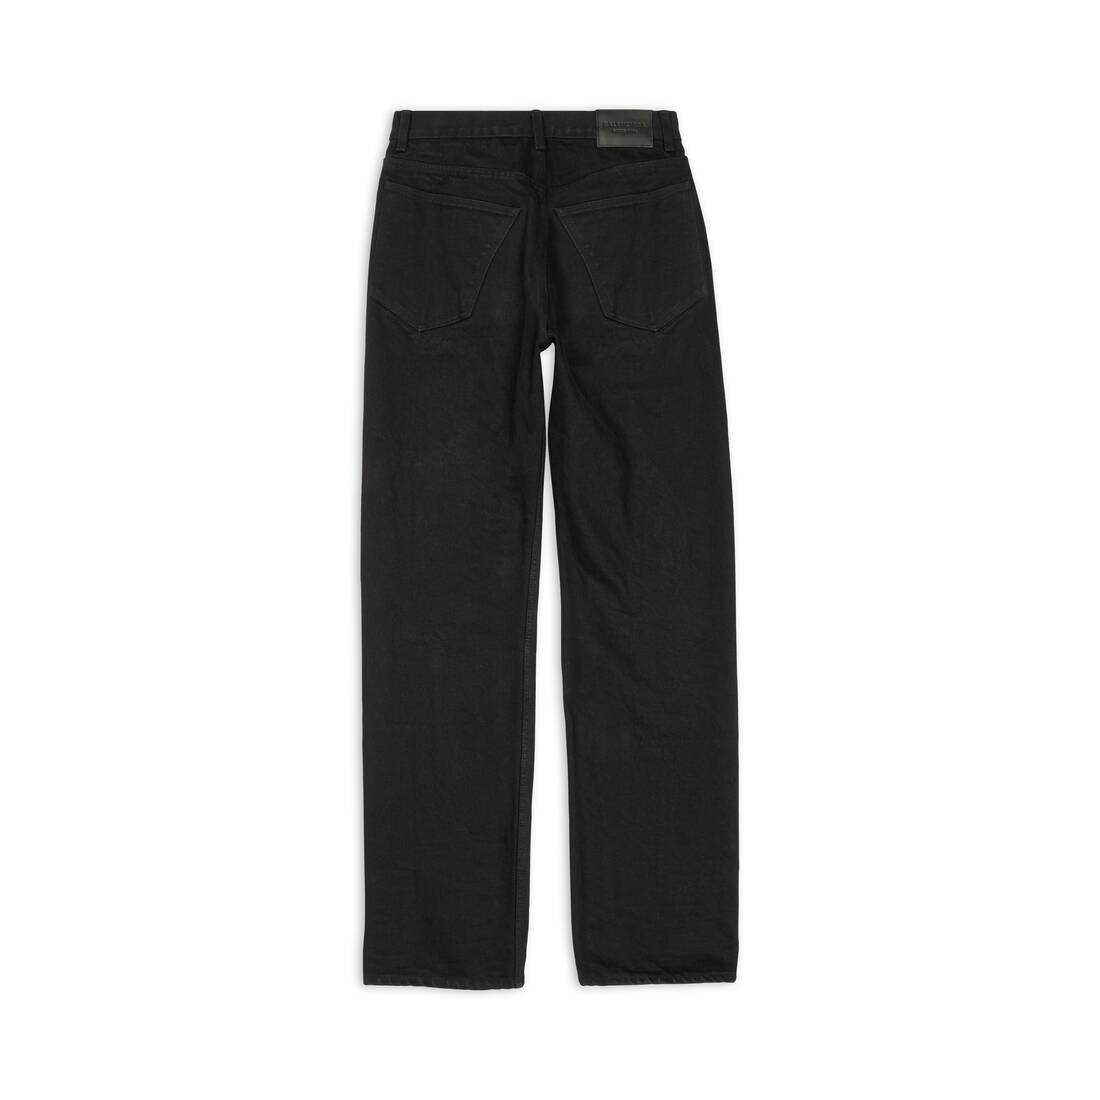 GenesinlifeShops Suriname - Topman Jeans skinny lavaggio candeggiato -  Black leggings with sensible logo fear of god essentials trousers charcoal  Balenciaga